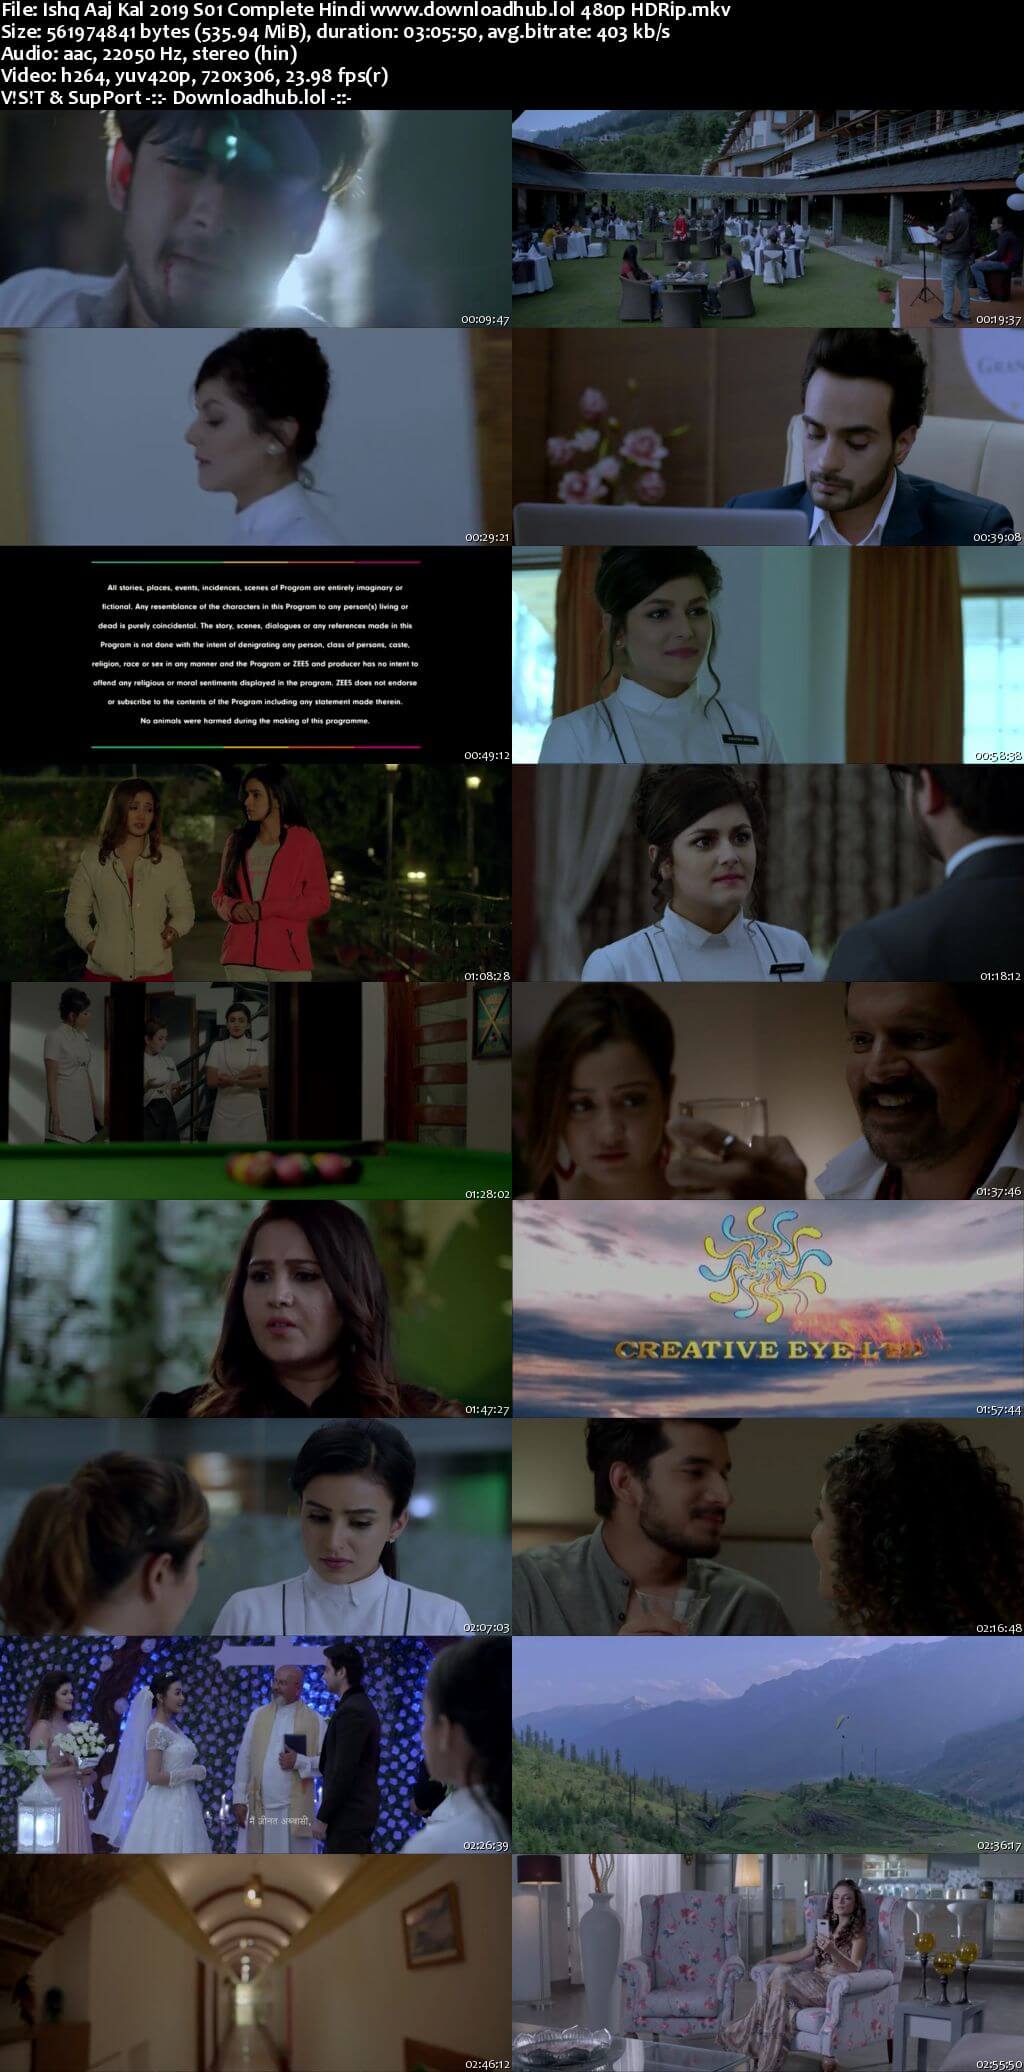 Ishq Aaj Kal 2019 Hindi Season 01 Complete 500MB HDRip 480p